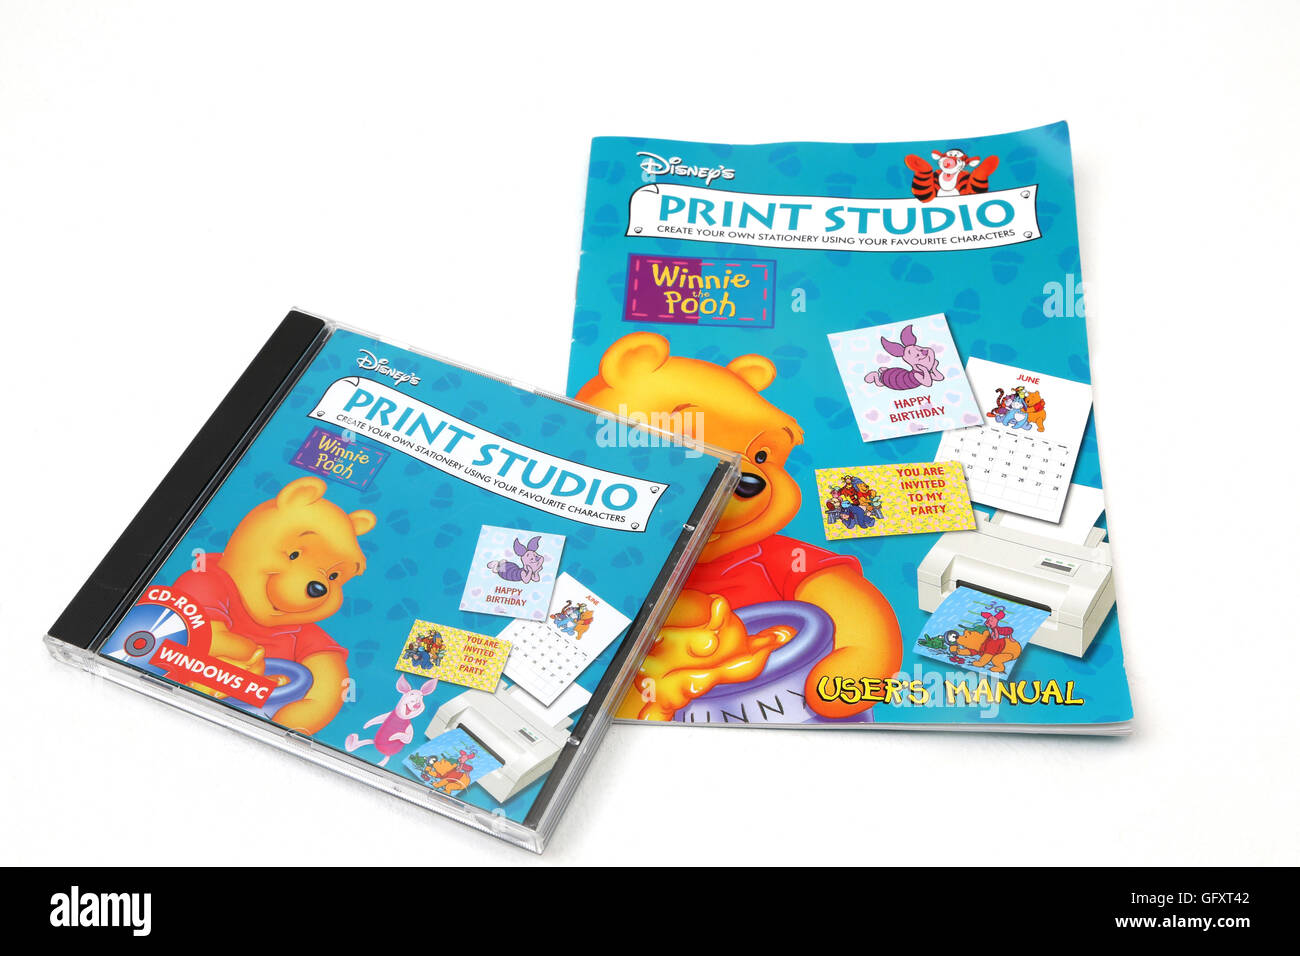 Winnie The Pooh Print Studio CD Rom And User's Manuel Stock Photo